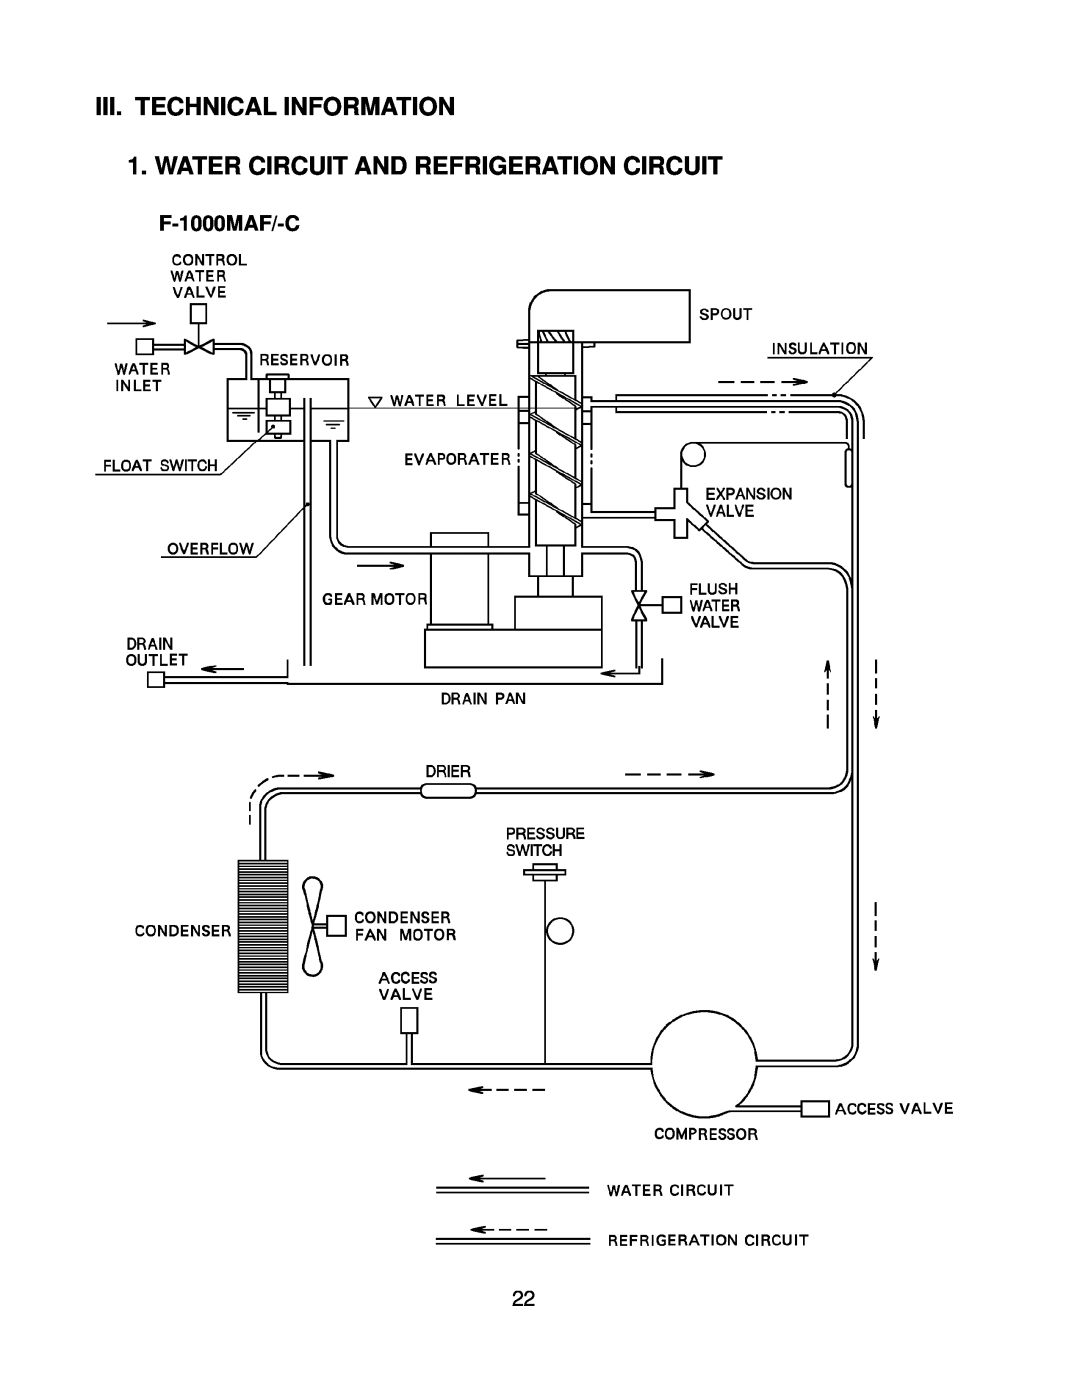 Hoshizaki F-1000MRF/-C, F-1000MLF/-C III. TECHNICAL INFORMATION 1. WATER CIRCUIT AND REFRIGERATION CIRCUIT, F-1000MAF/-C 